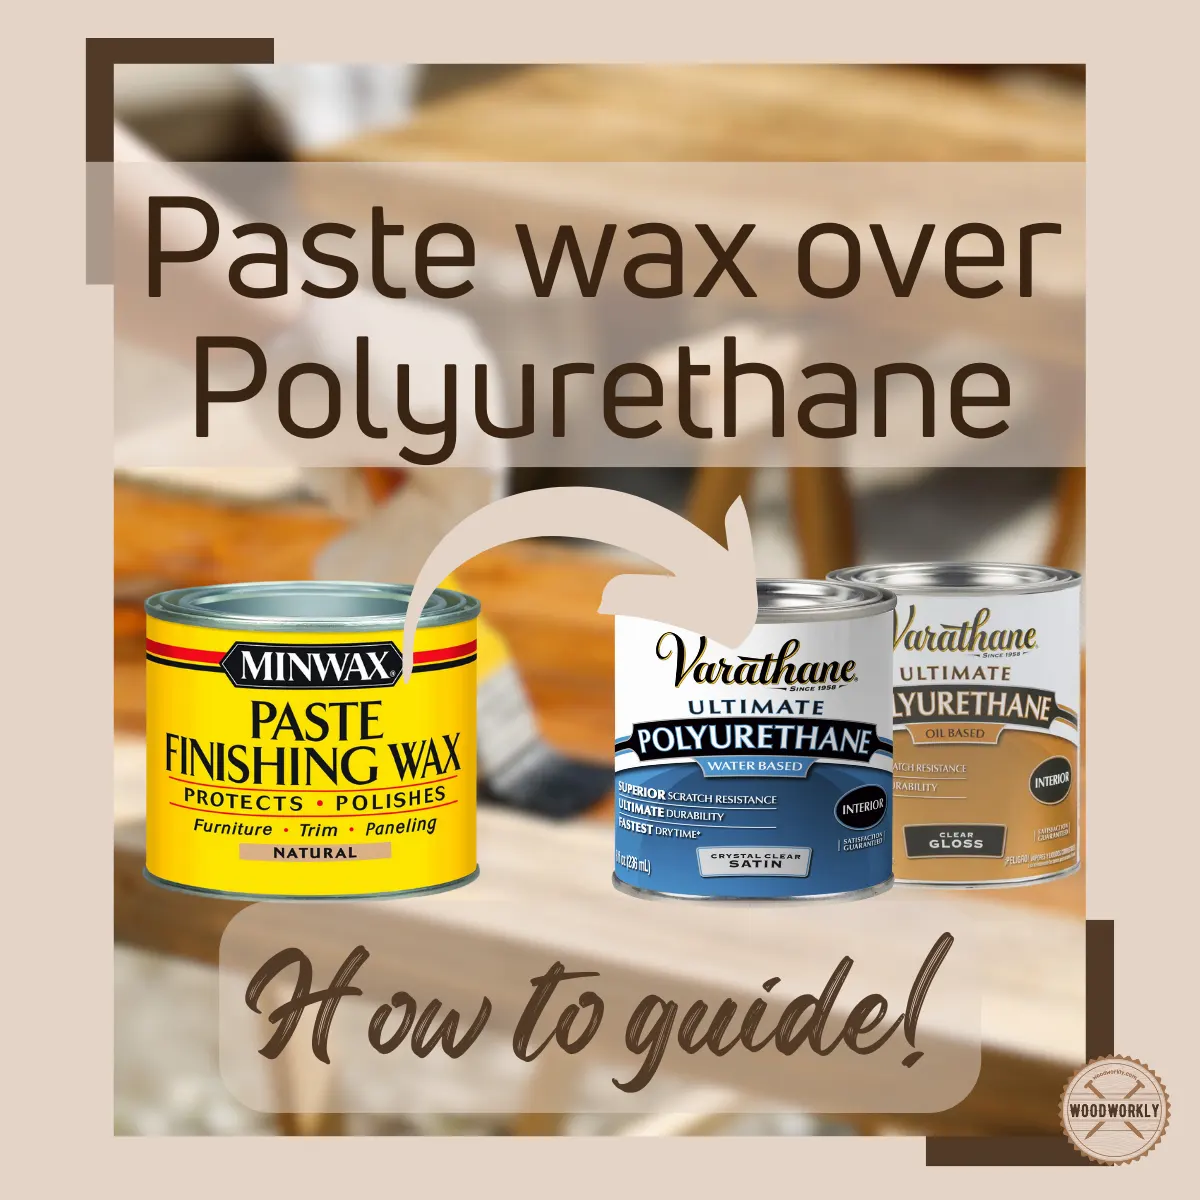 Paste wax over Polyurethane